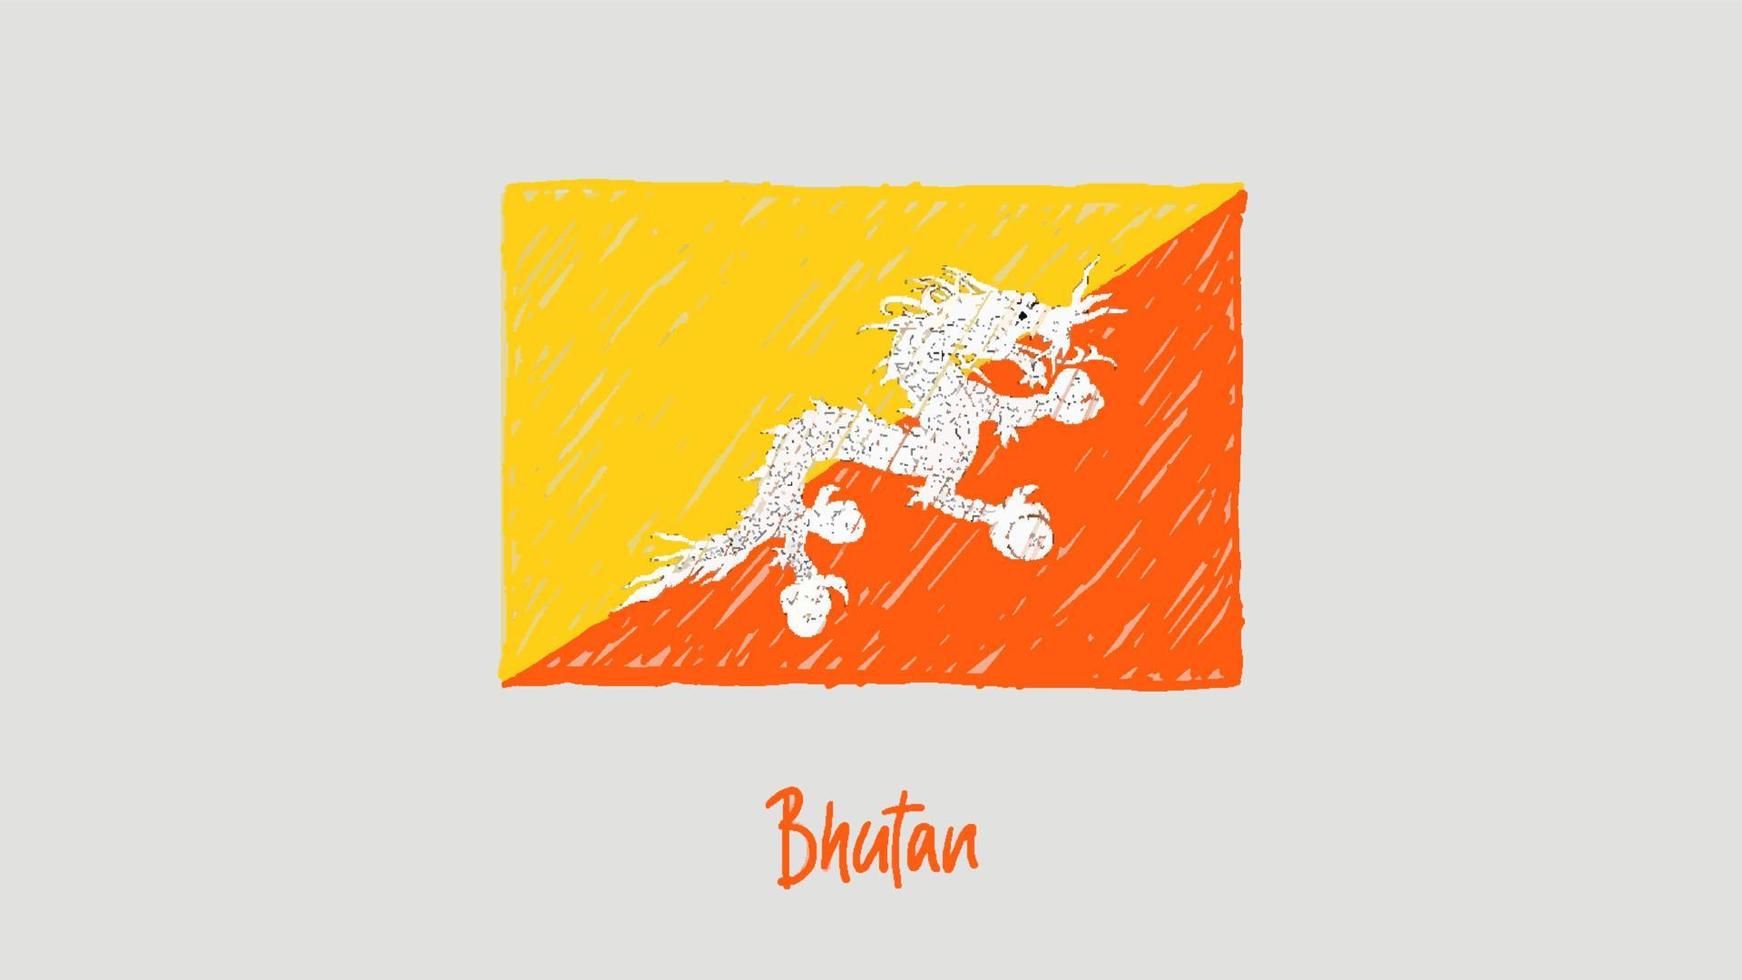 Bhutan Flag Marker or Pencil Sketch Illustration Vector